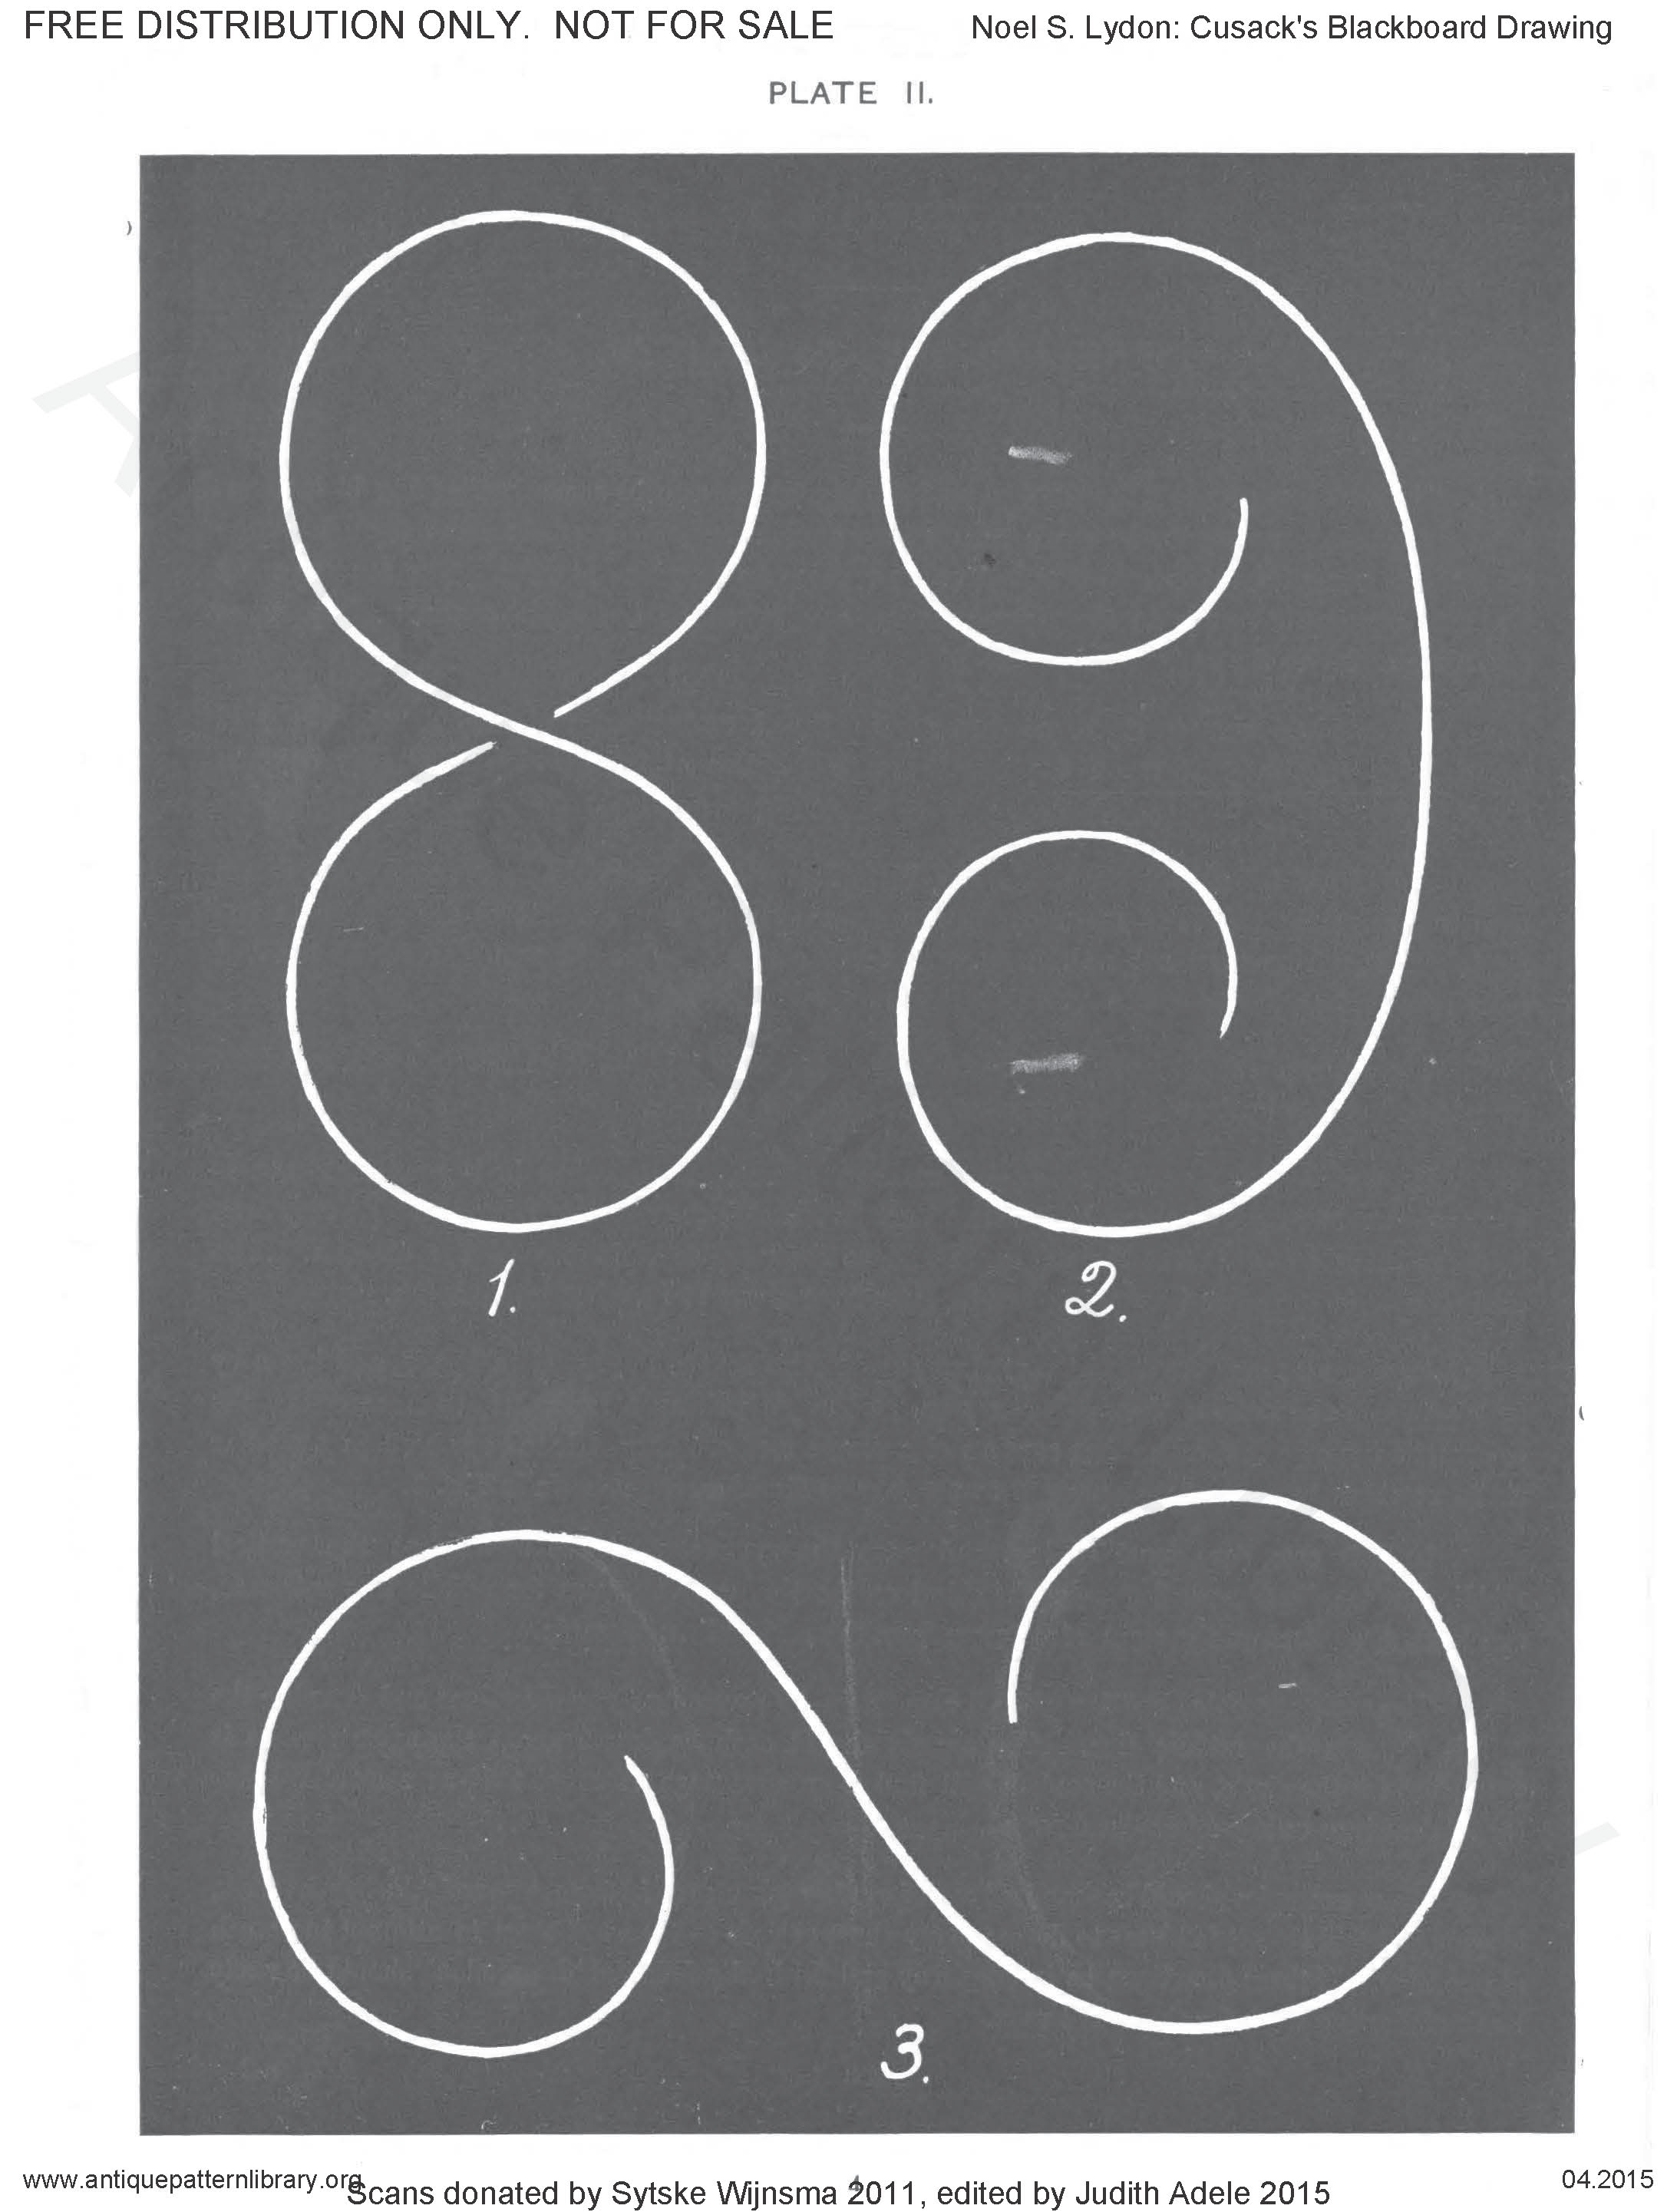 B-YS069 Cusack's Blackboard Drawing